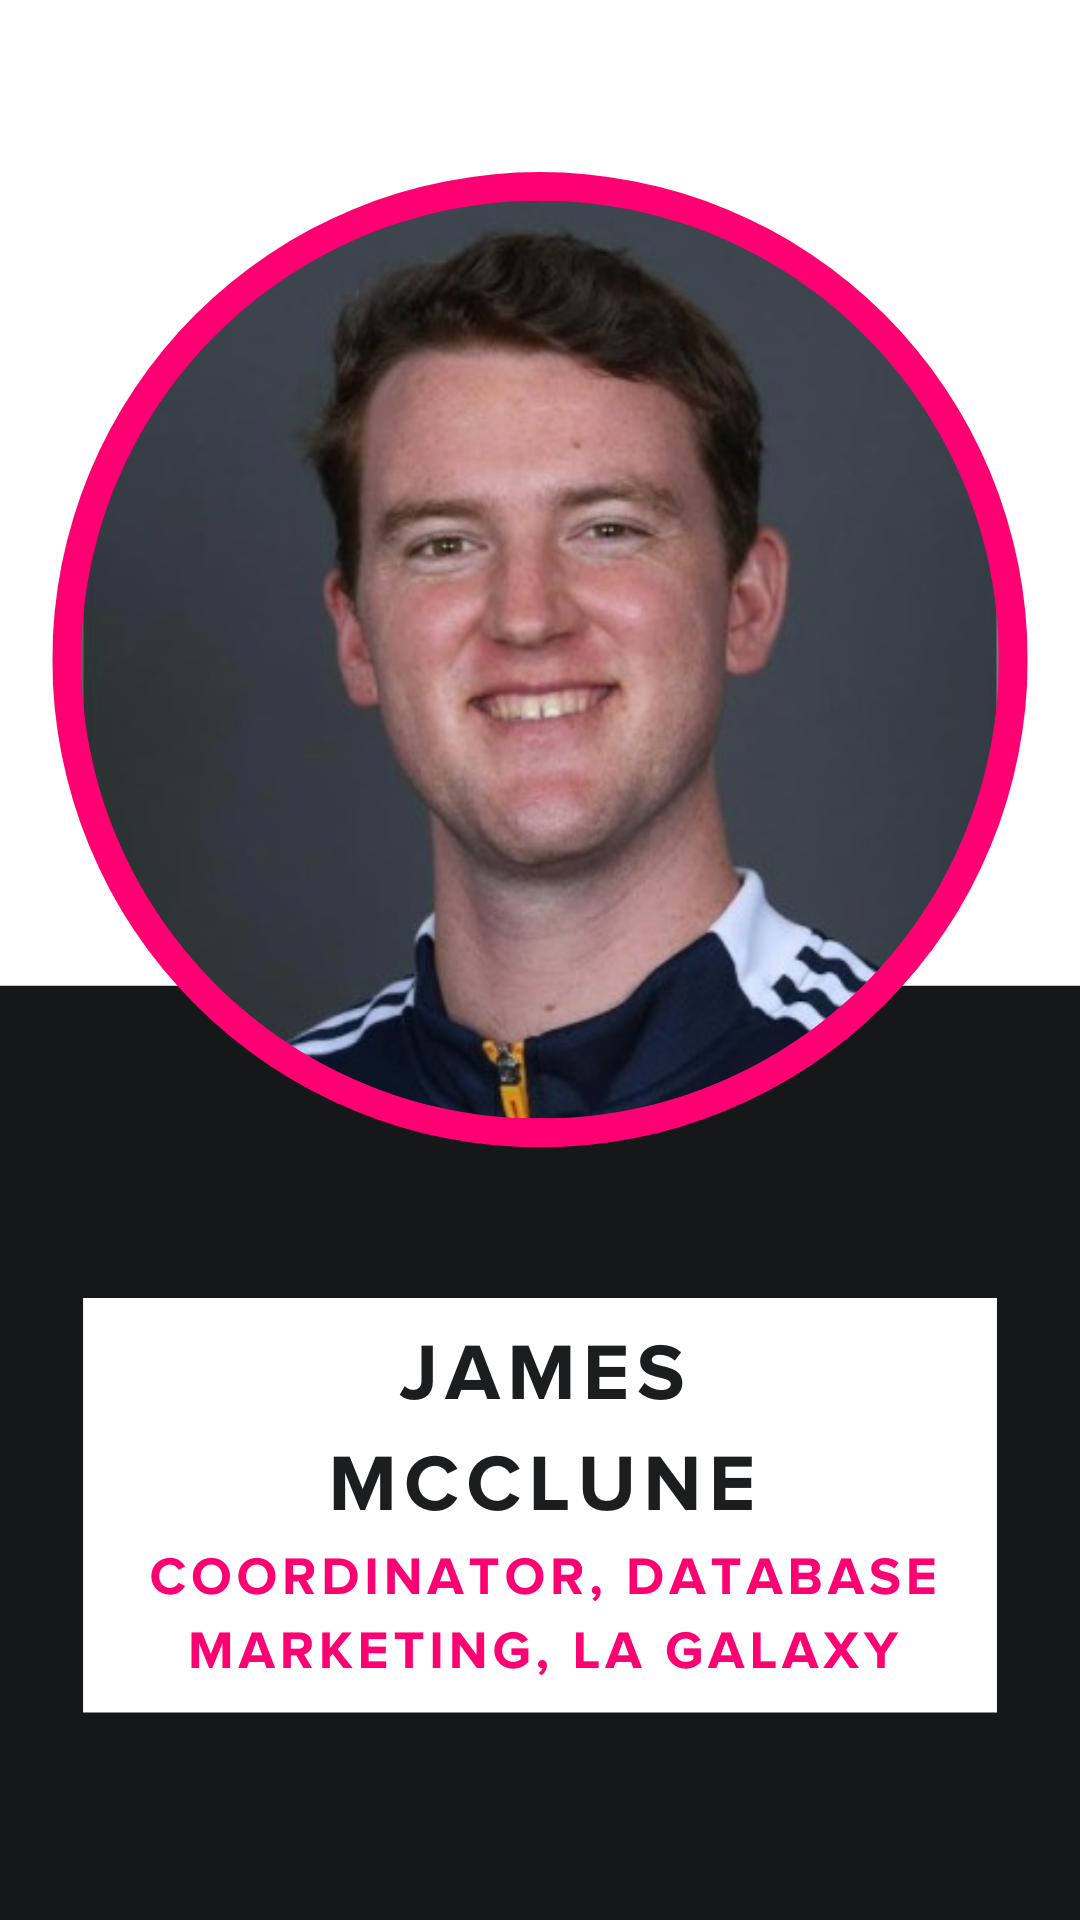 James McClune